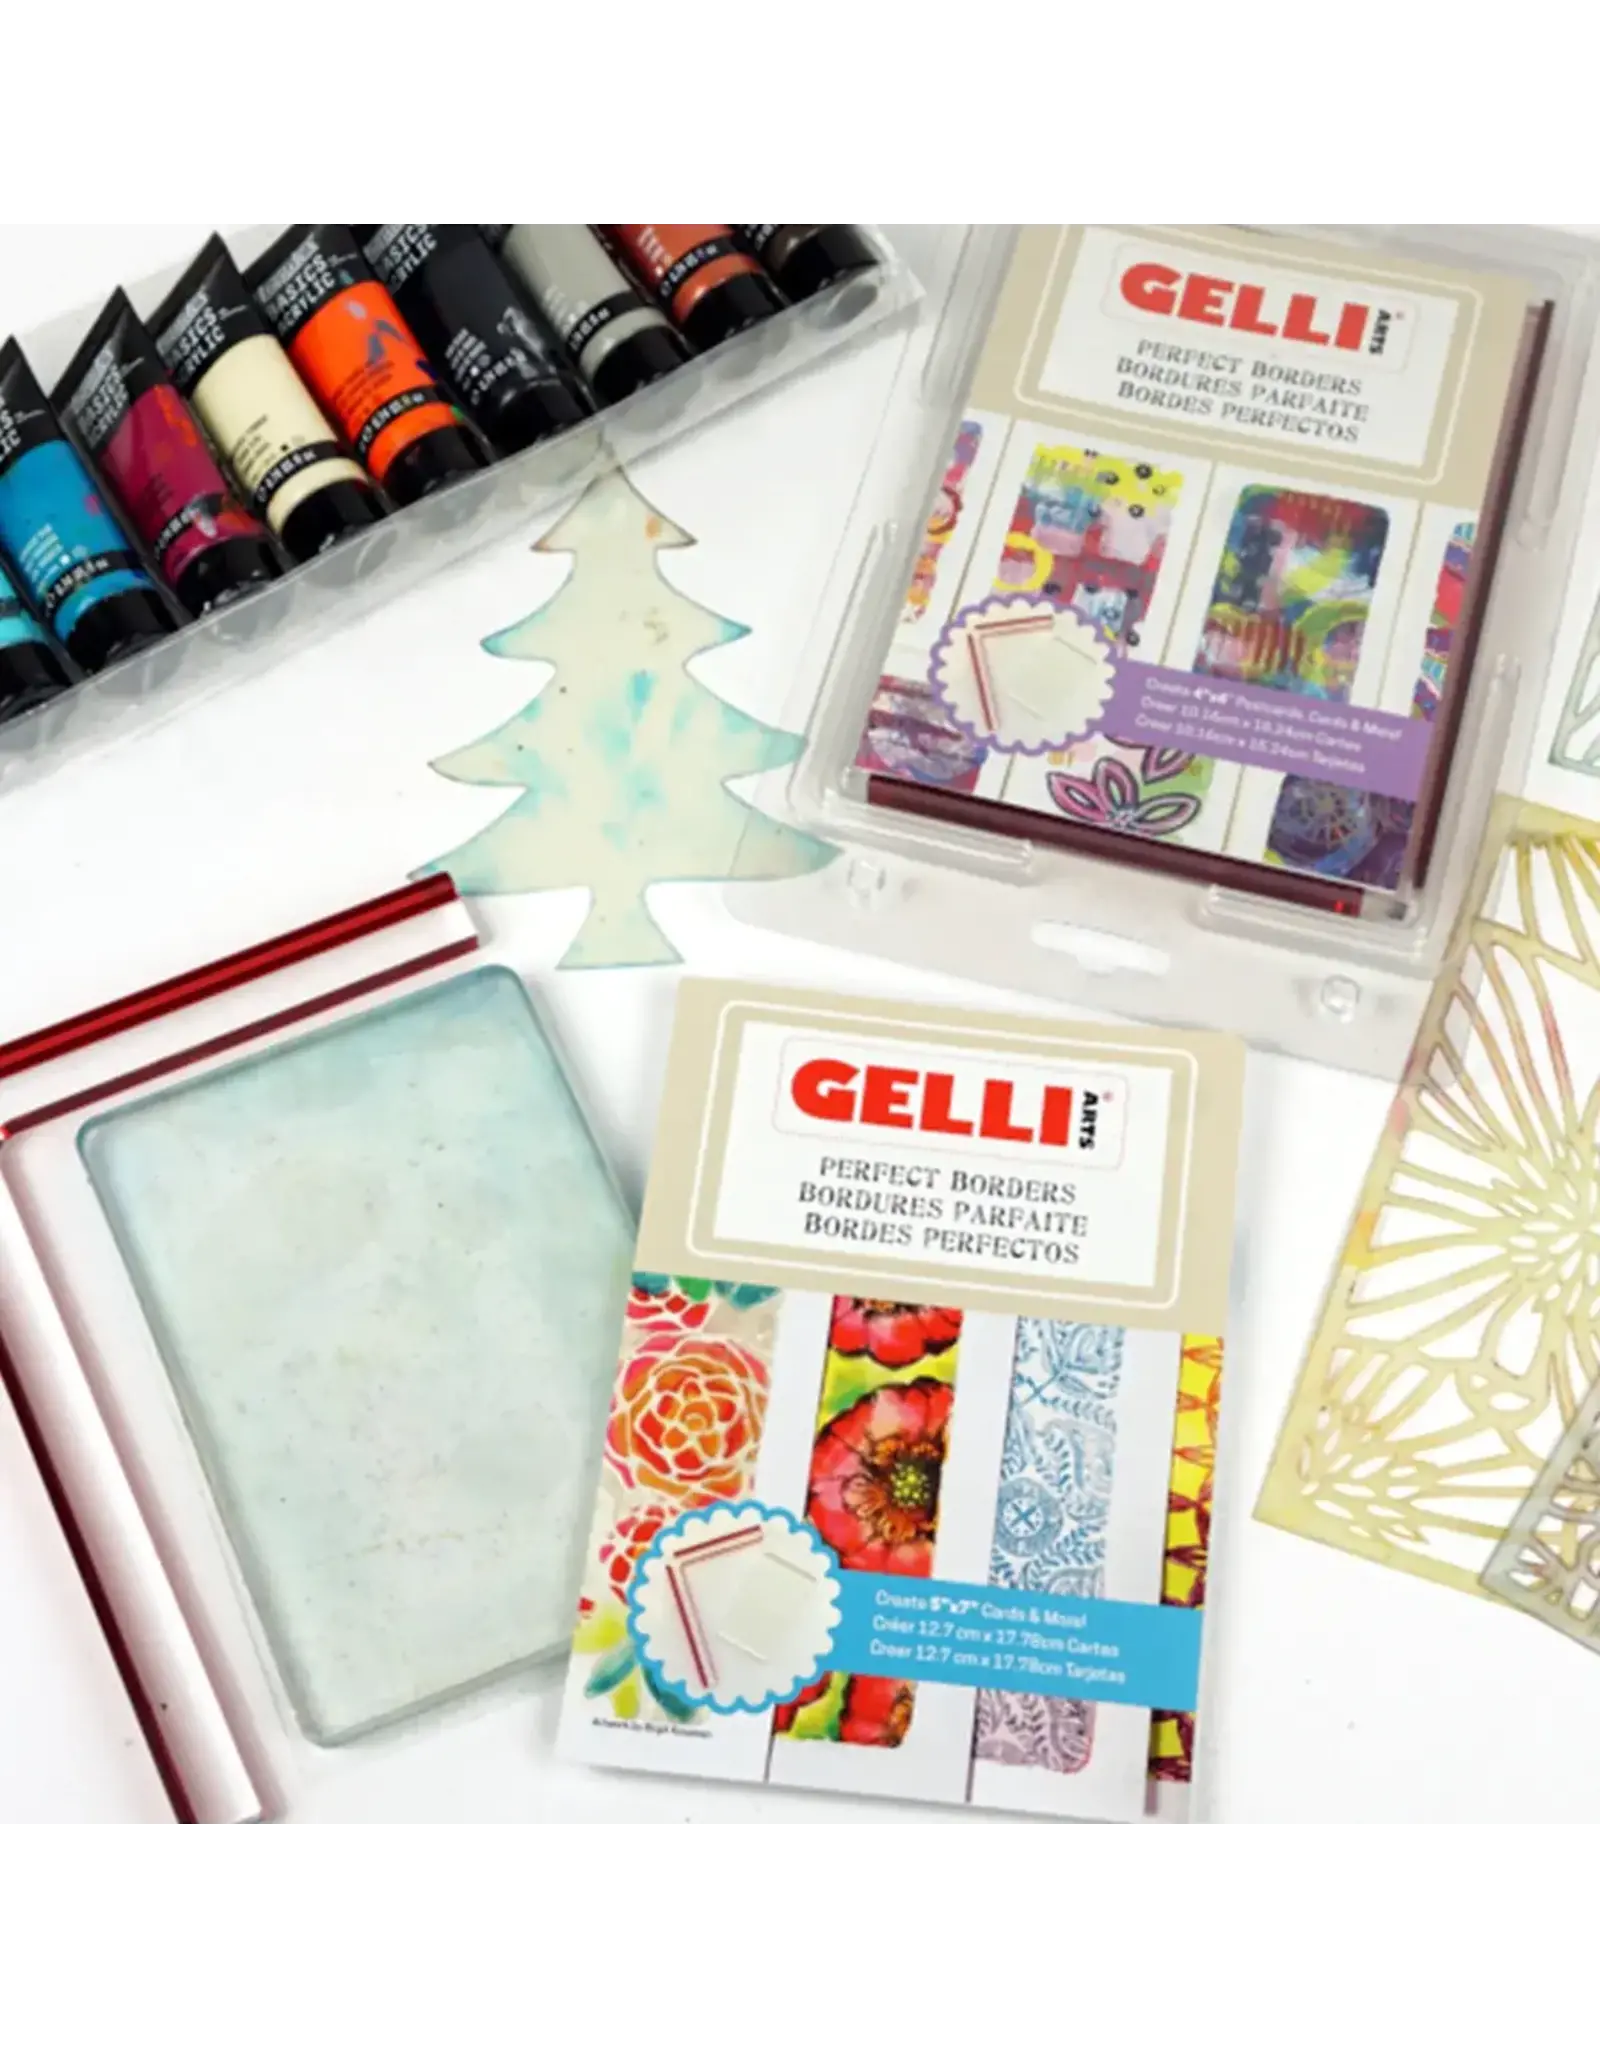 GELLI ARTS GELLI ARTS PERFECT BORDERS GEL PRINTING PLATE CREATE 5x7 CARDS & MORE!